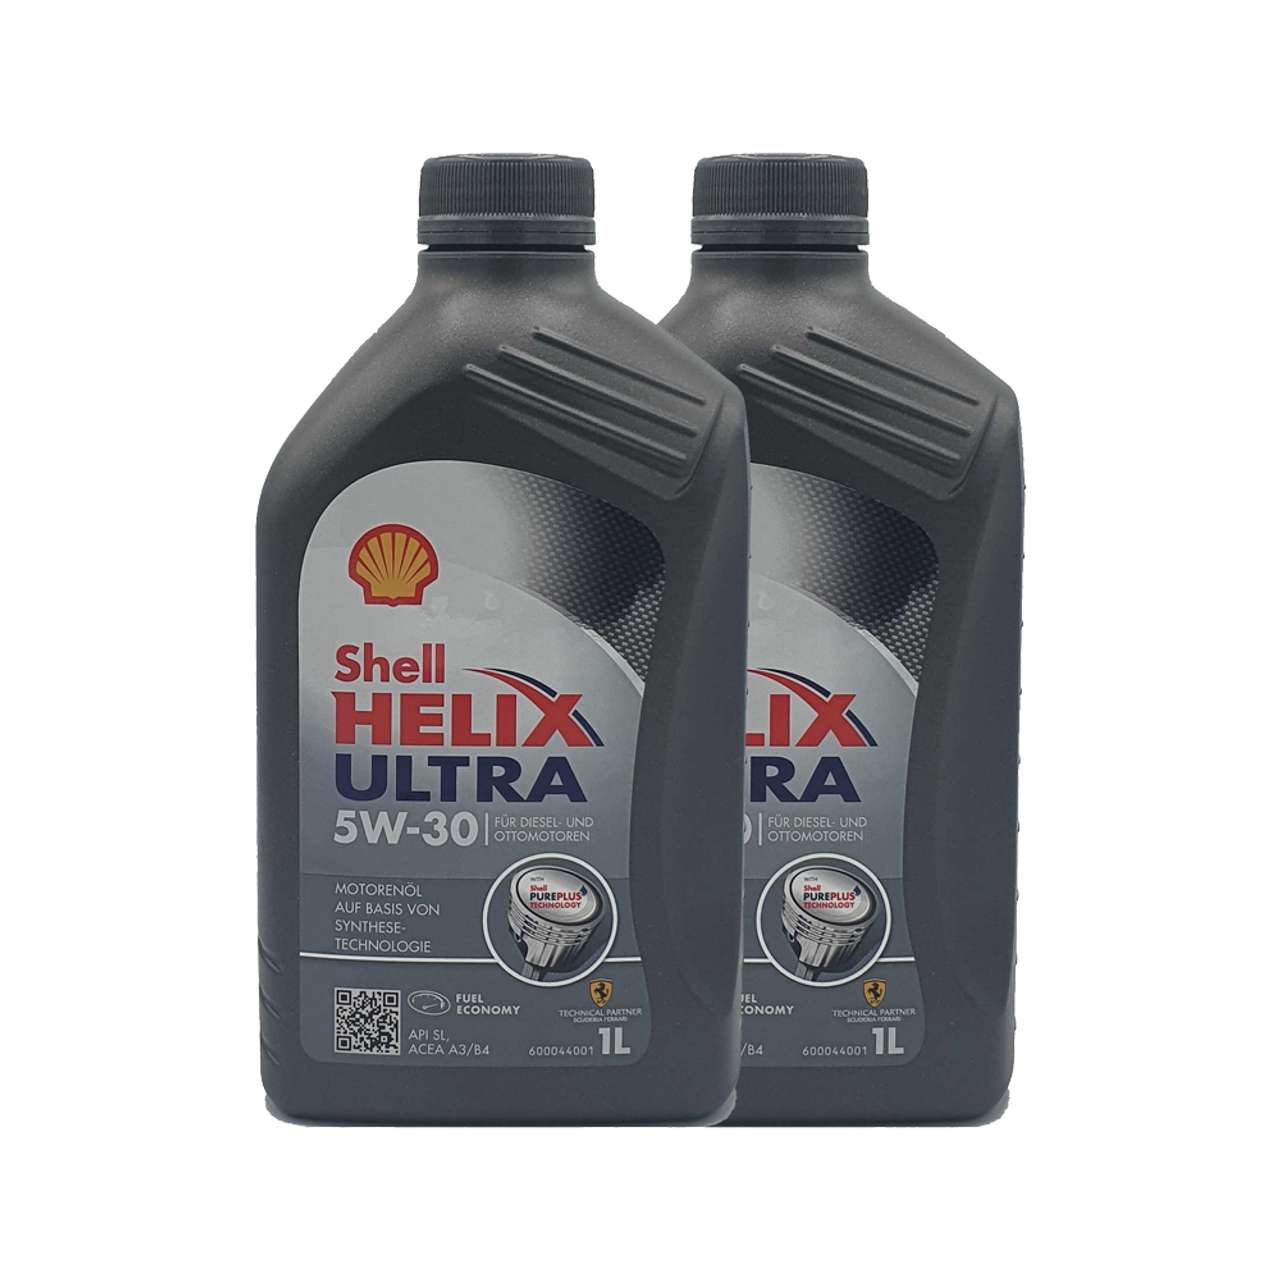 Shell Helix Ultra 5W-30 2x1 Liter